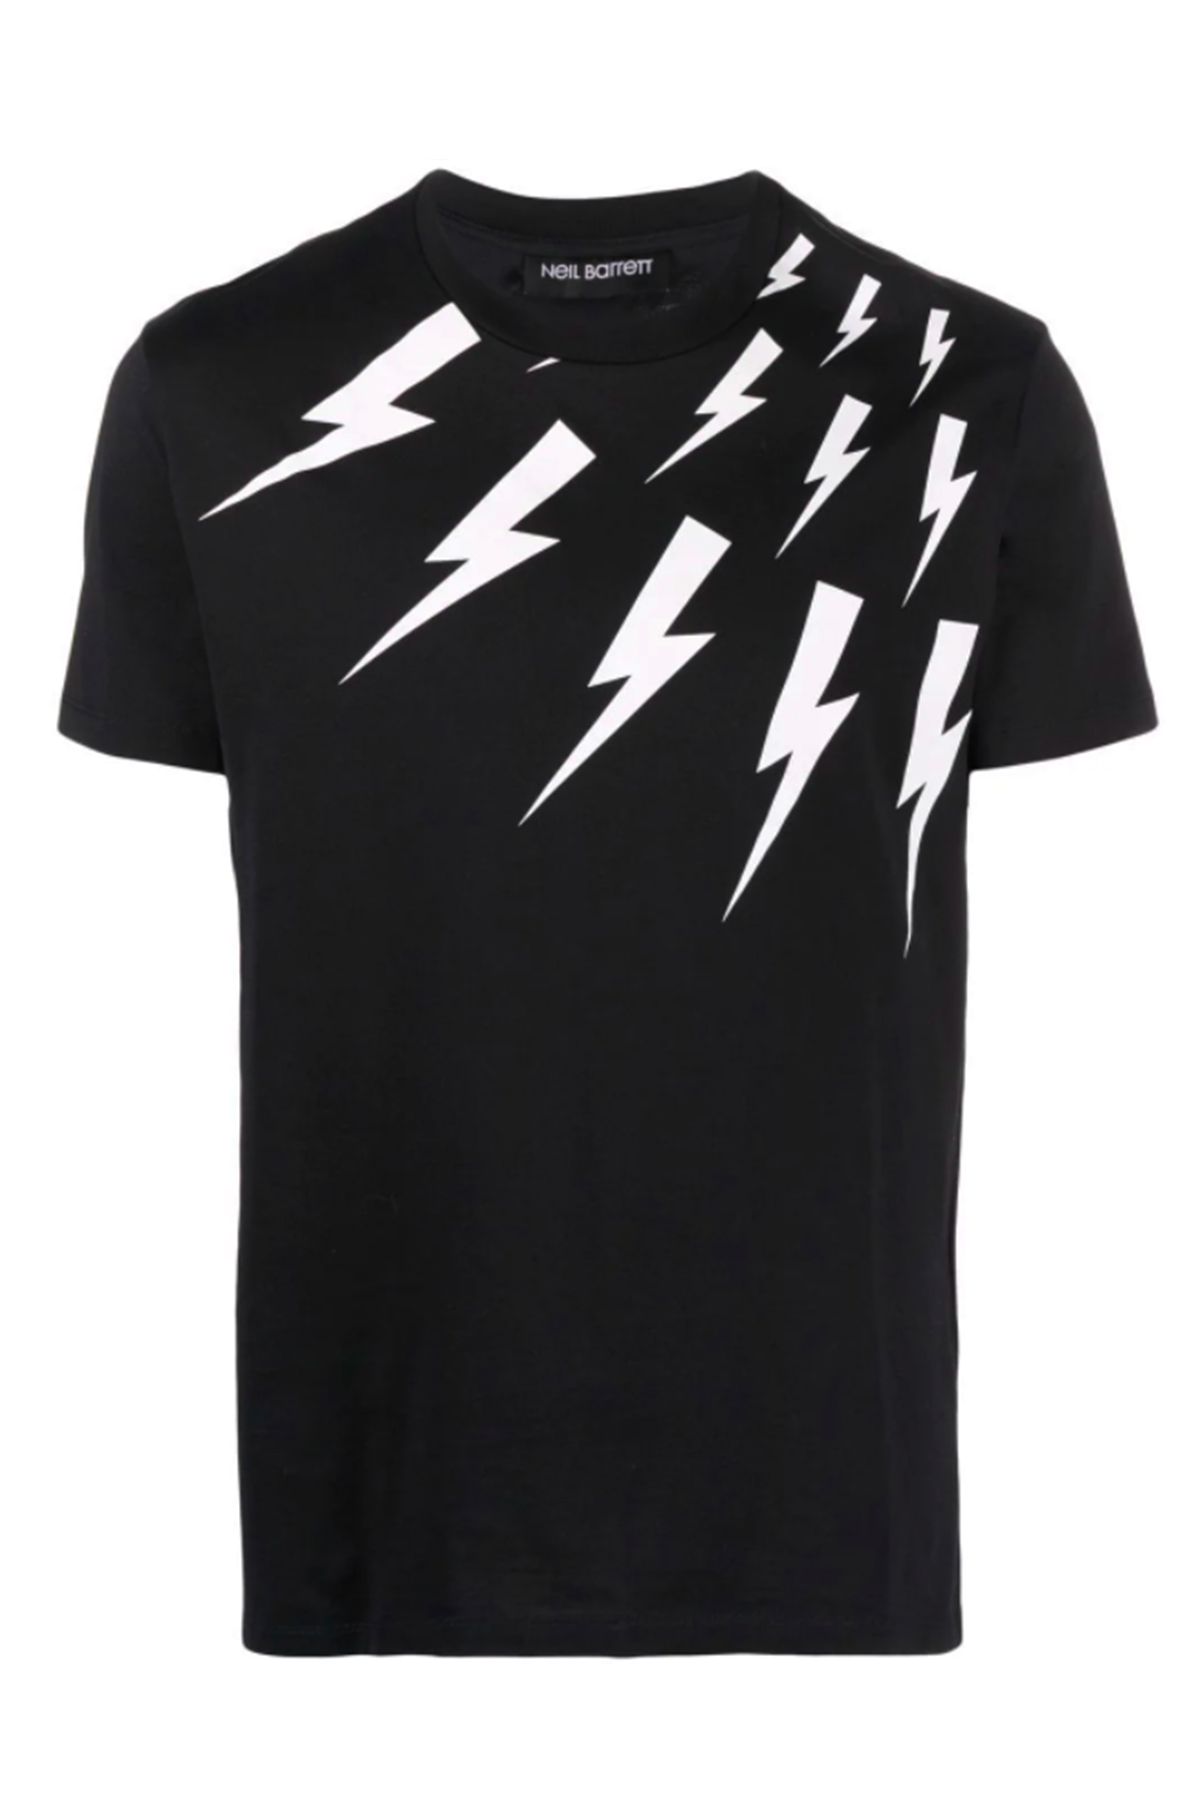 NEIL BARRETT T-shirt Thunderbolt | SHOPenauer